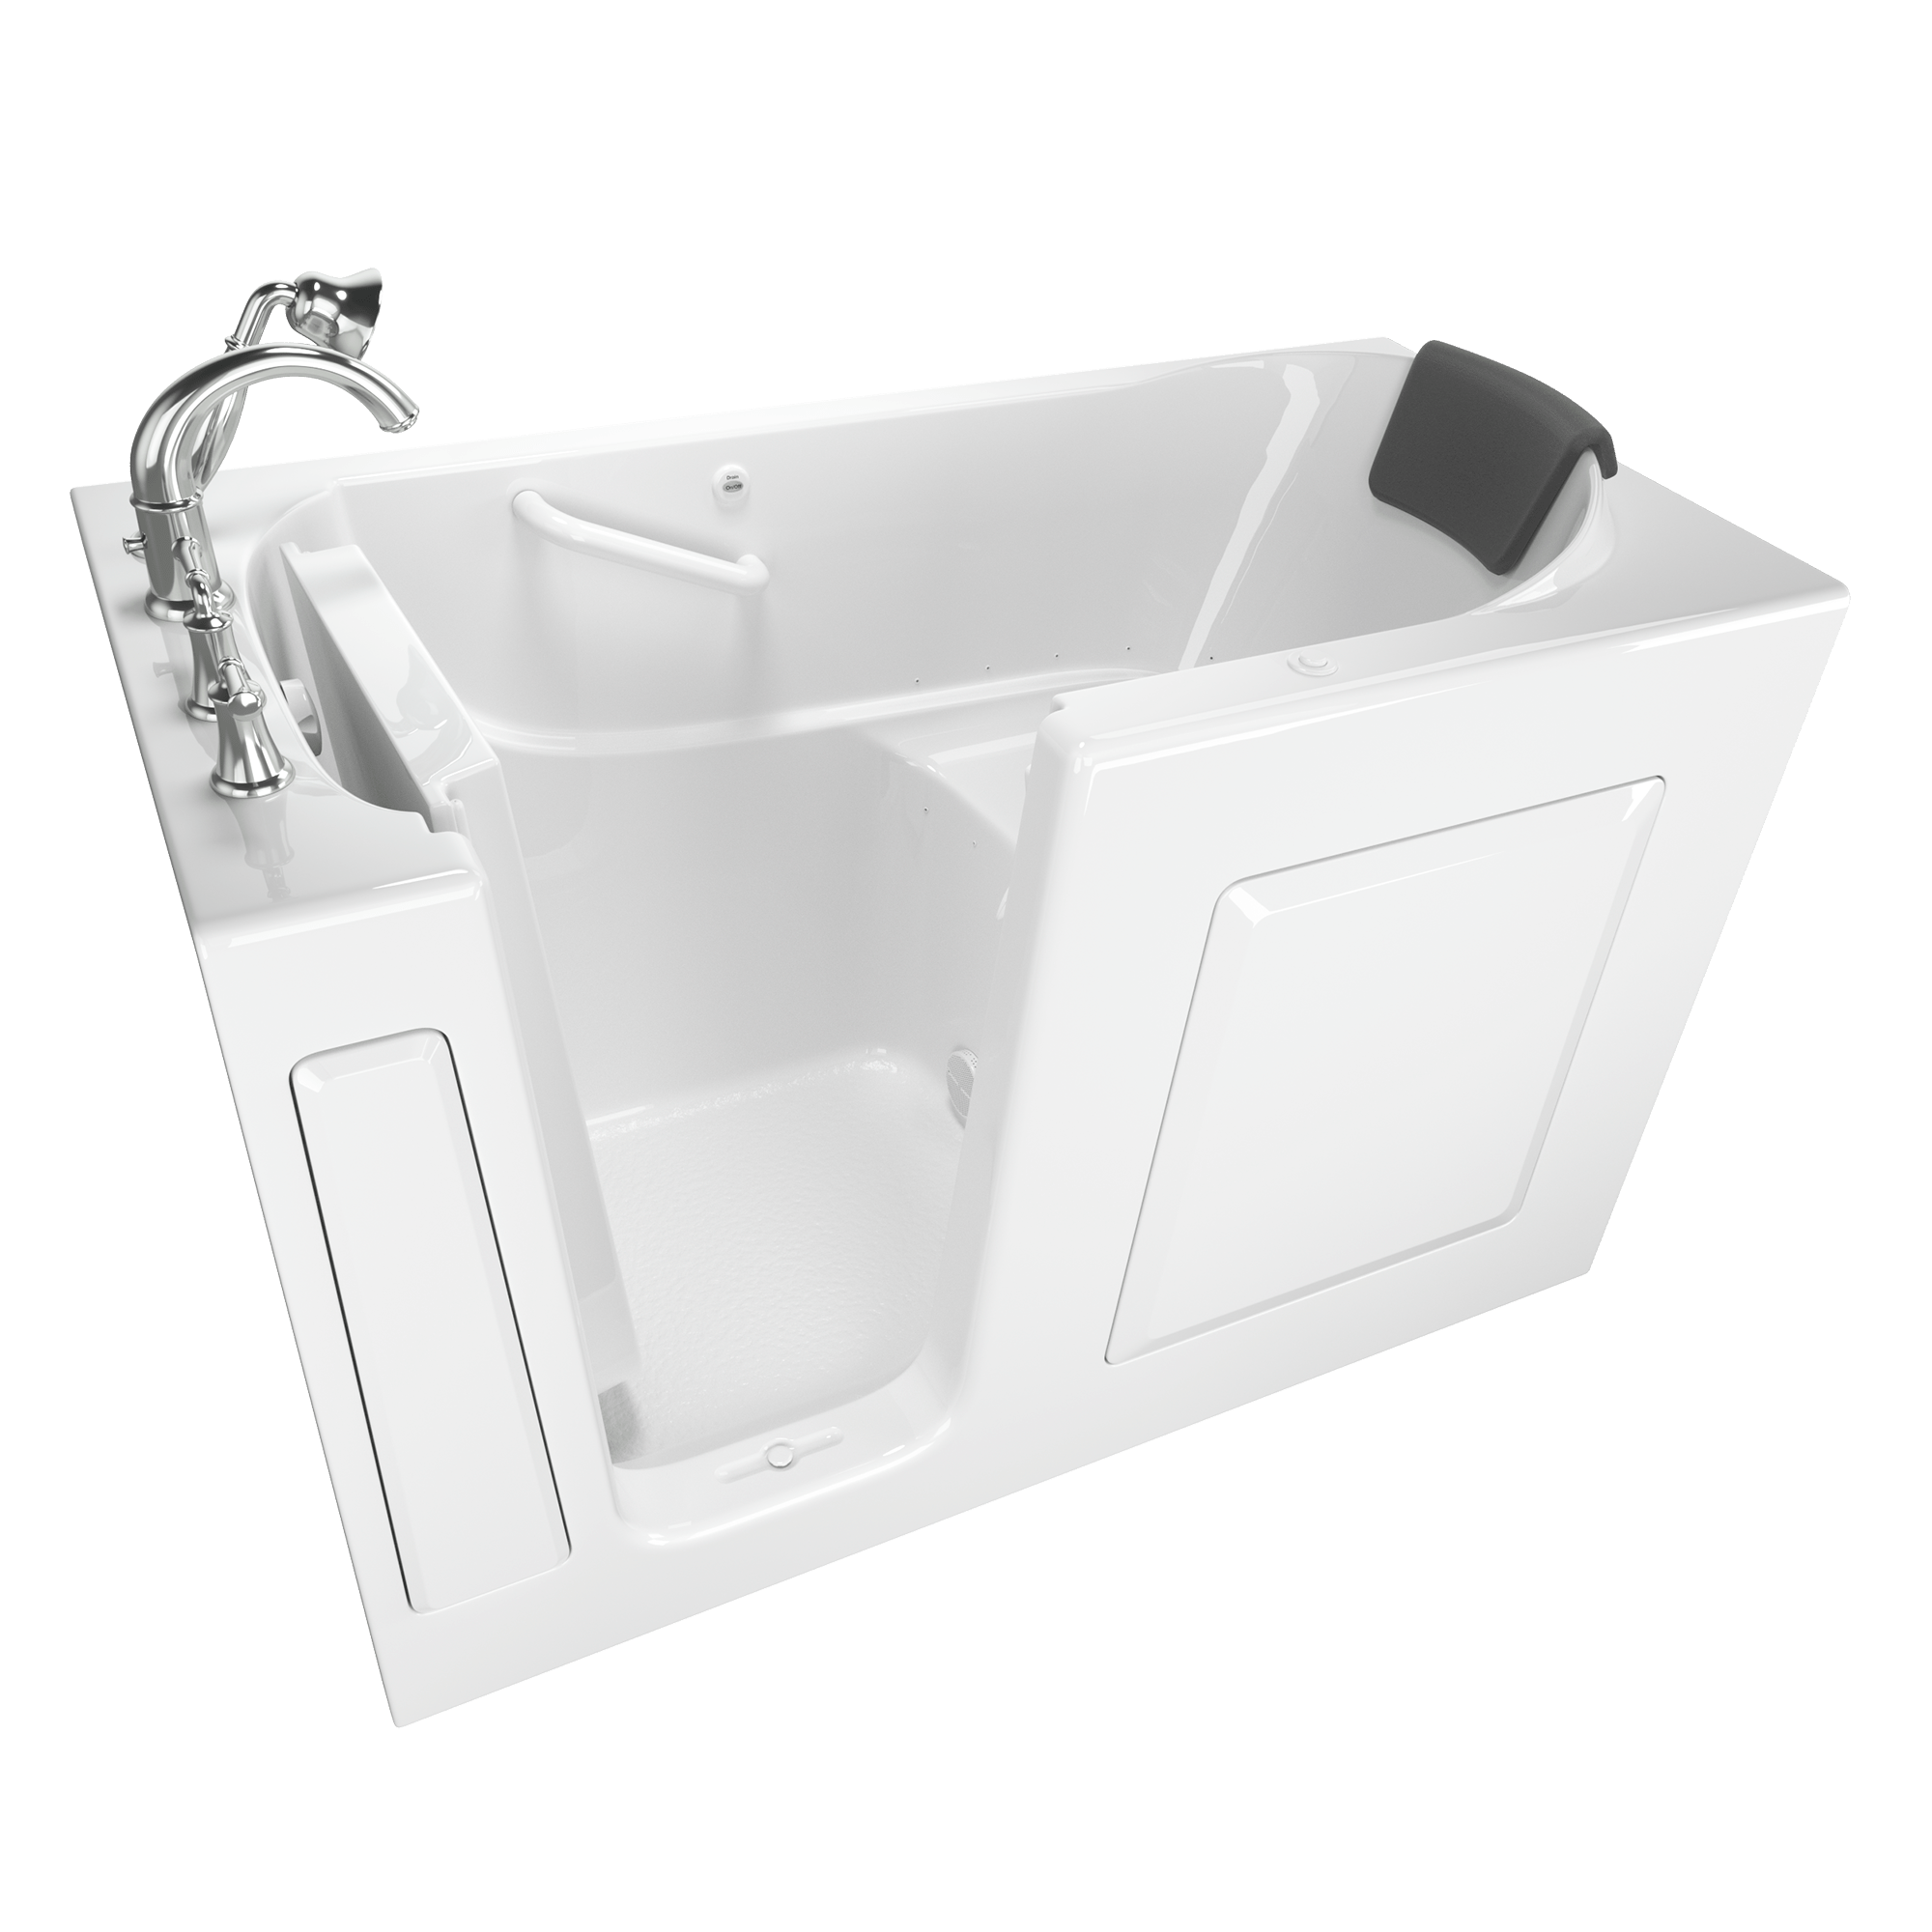 Gelcoat Premium Series 60x30 Inch Walk-In Bathtub with Air Massage System - Left Hand Door and Drain